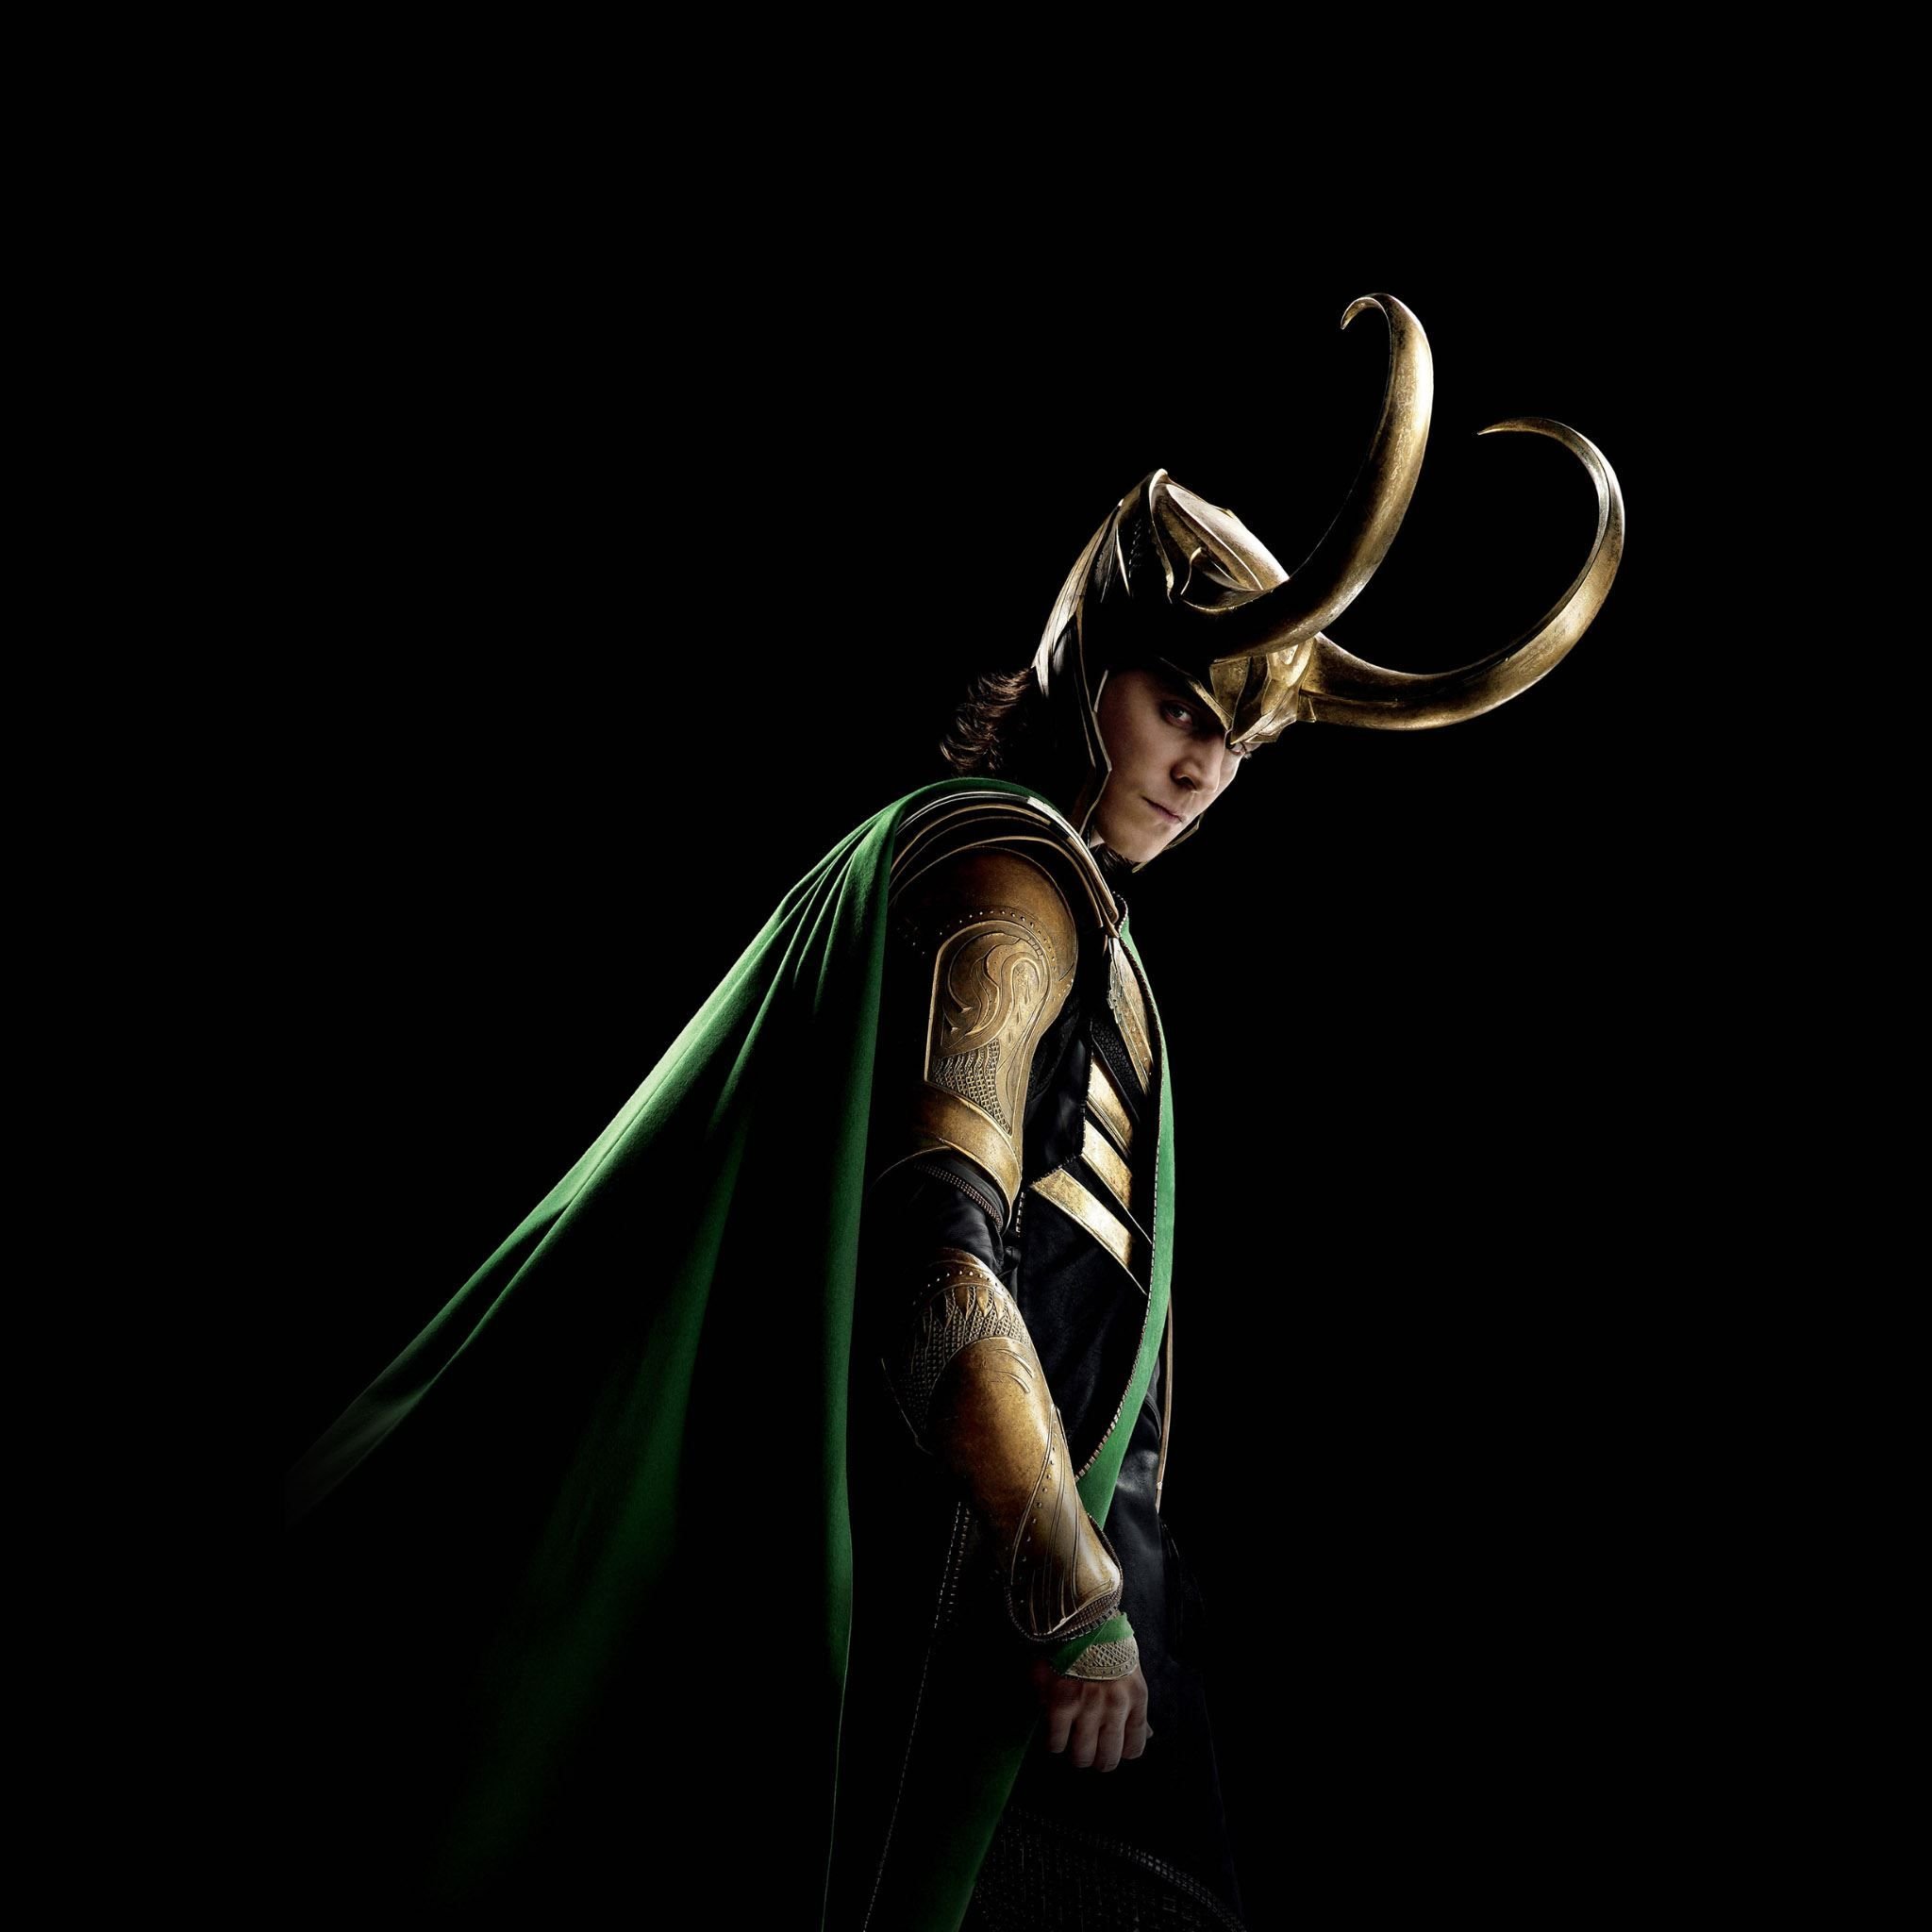 Loki Avengers Movie Role iPad Air Wallpaper Free Download